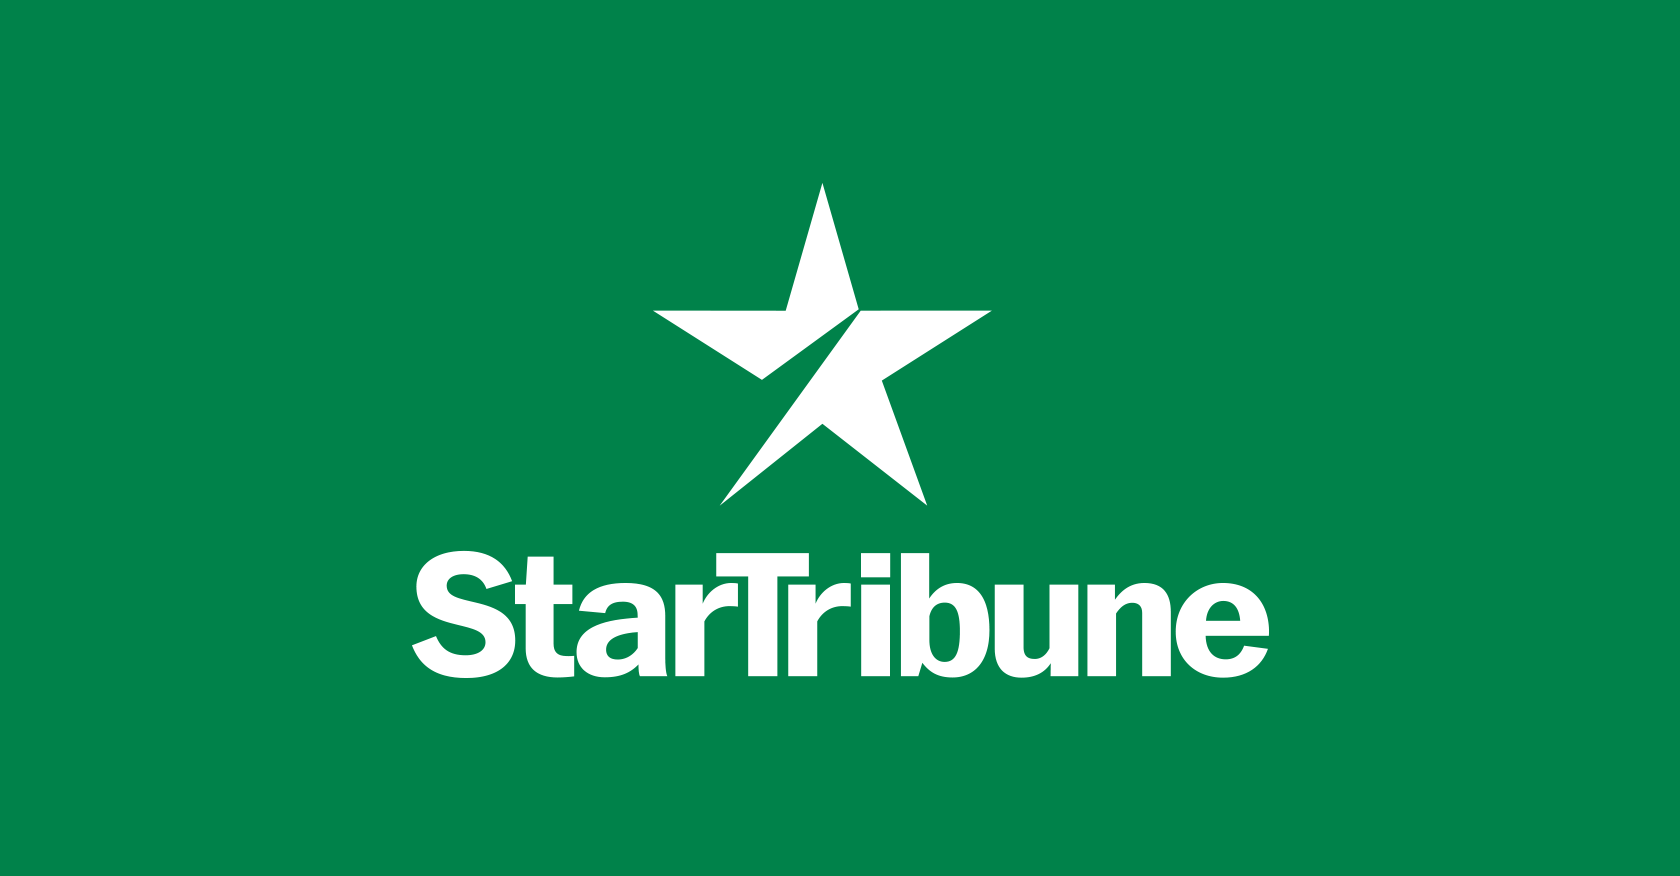 The Star Tribune logo